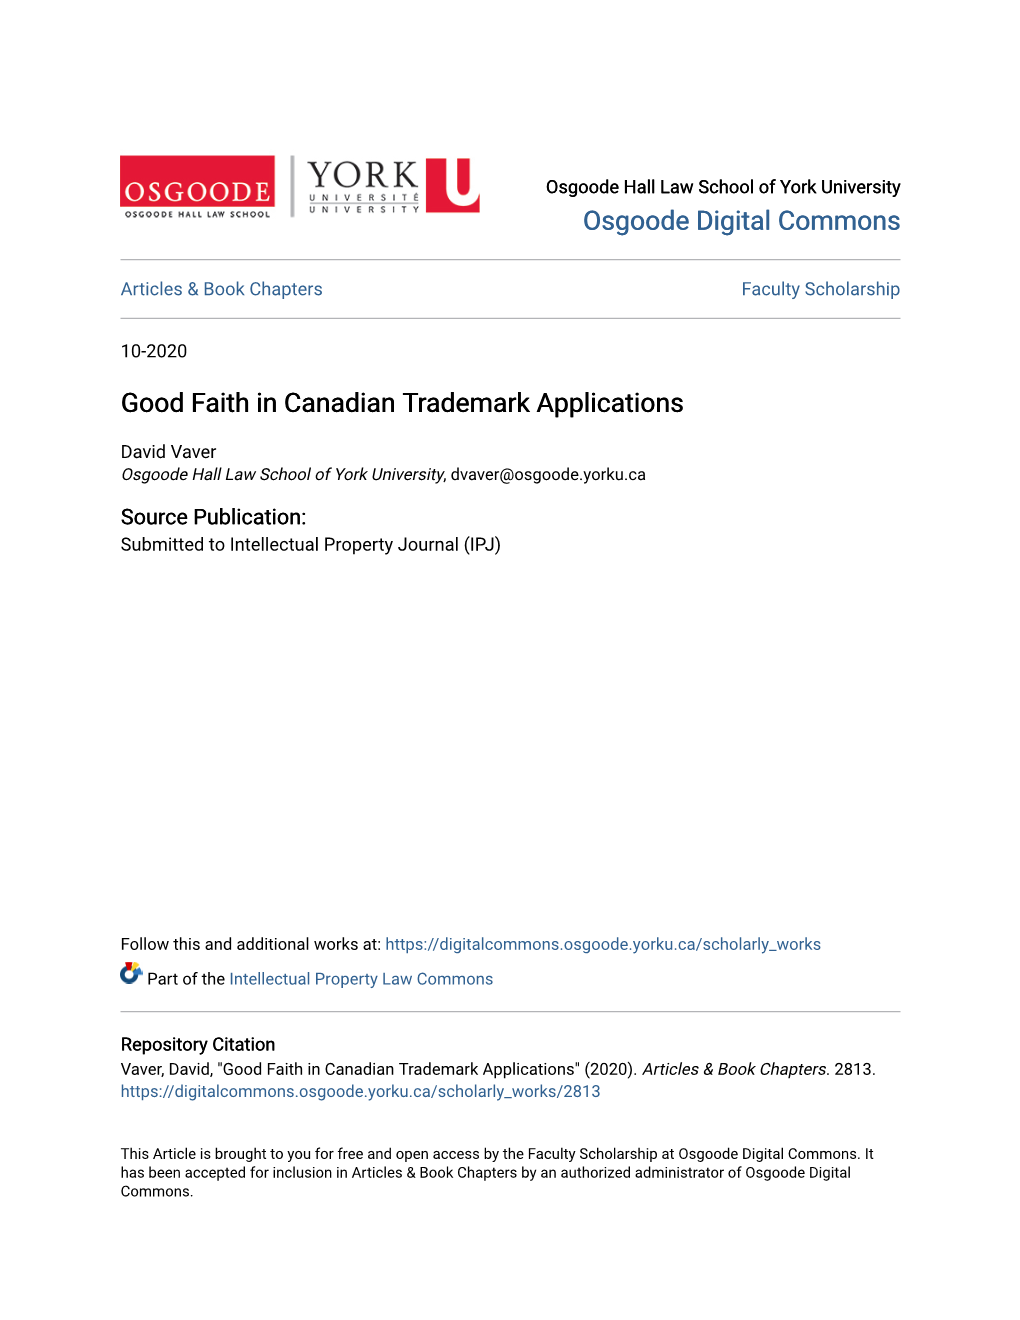 Good Faith in Canadian Trademark Applications